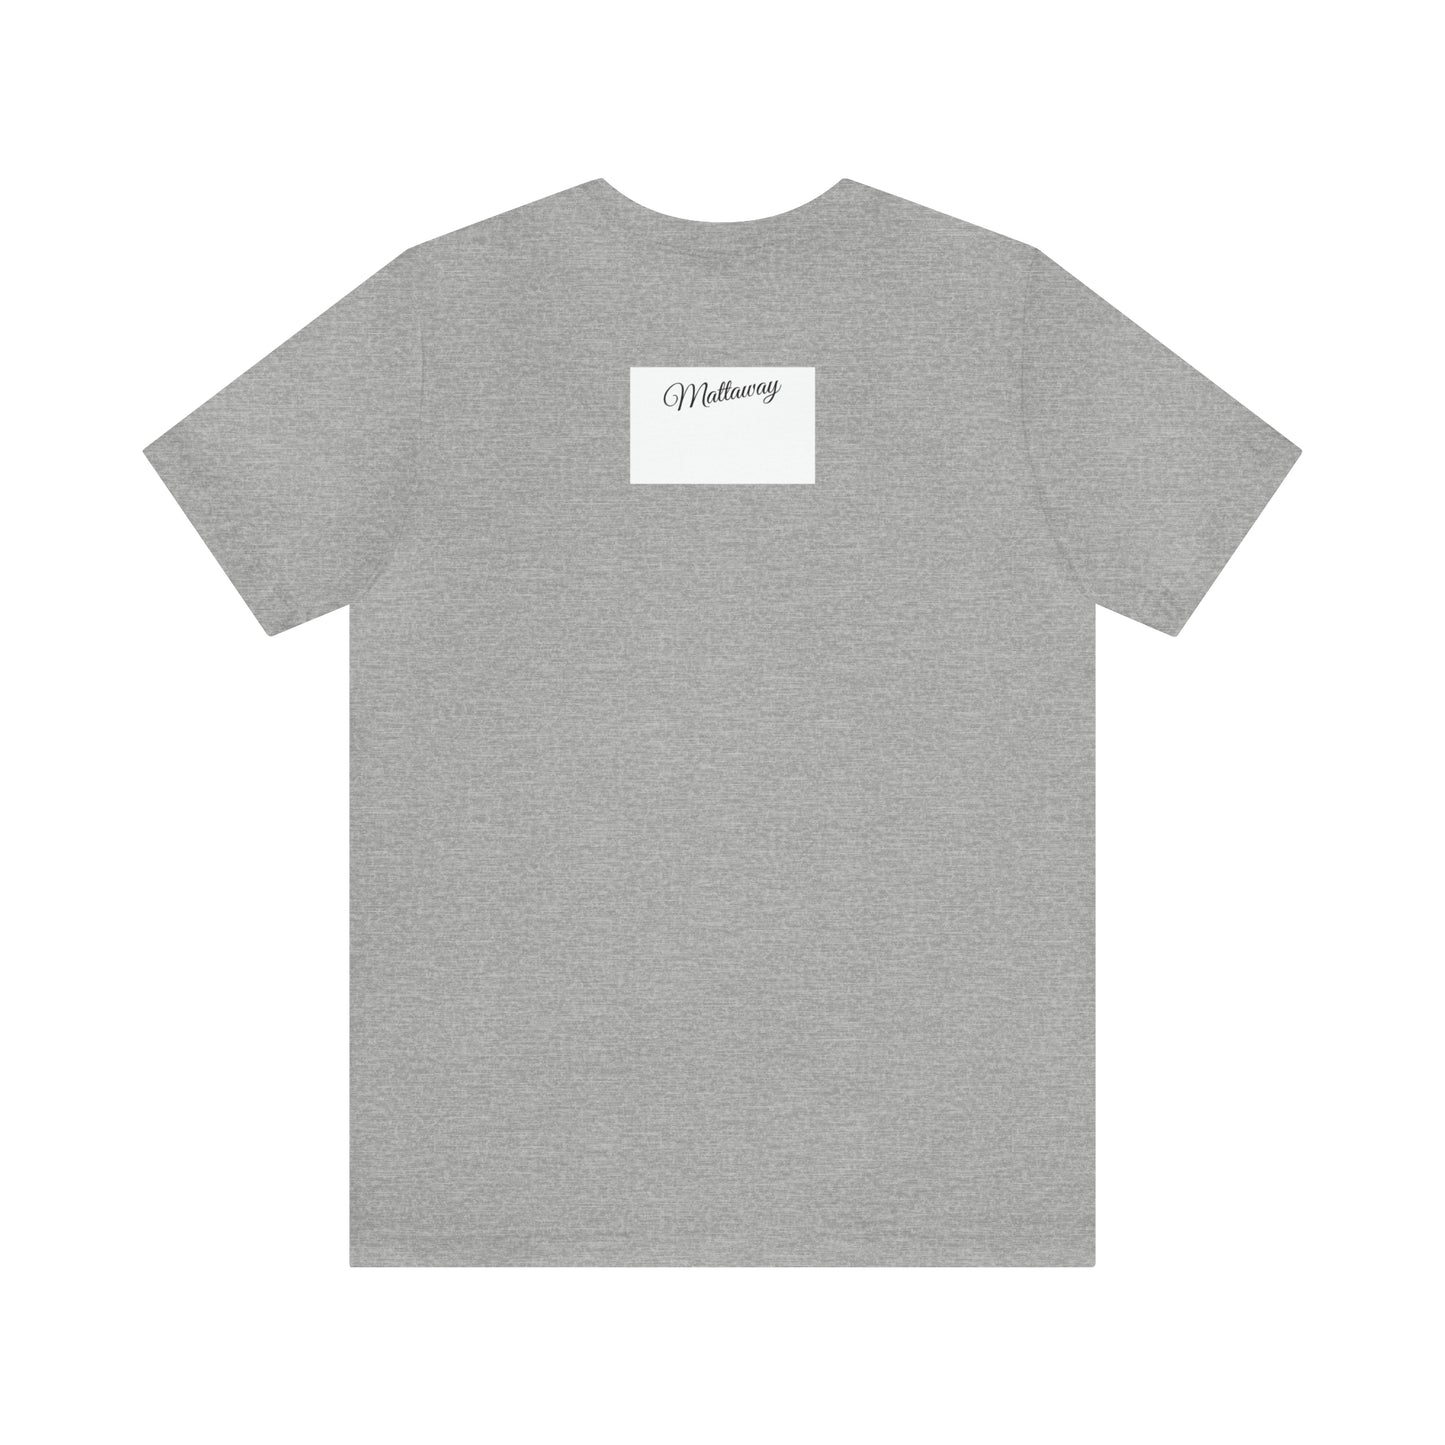 MATTAWAY 100101 - Camiseta unisex de manga corta